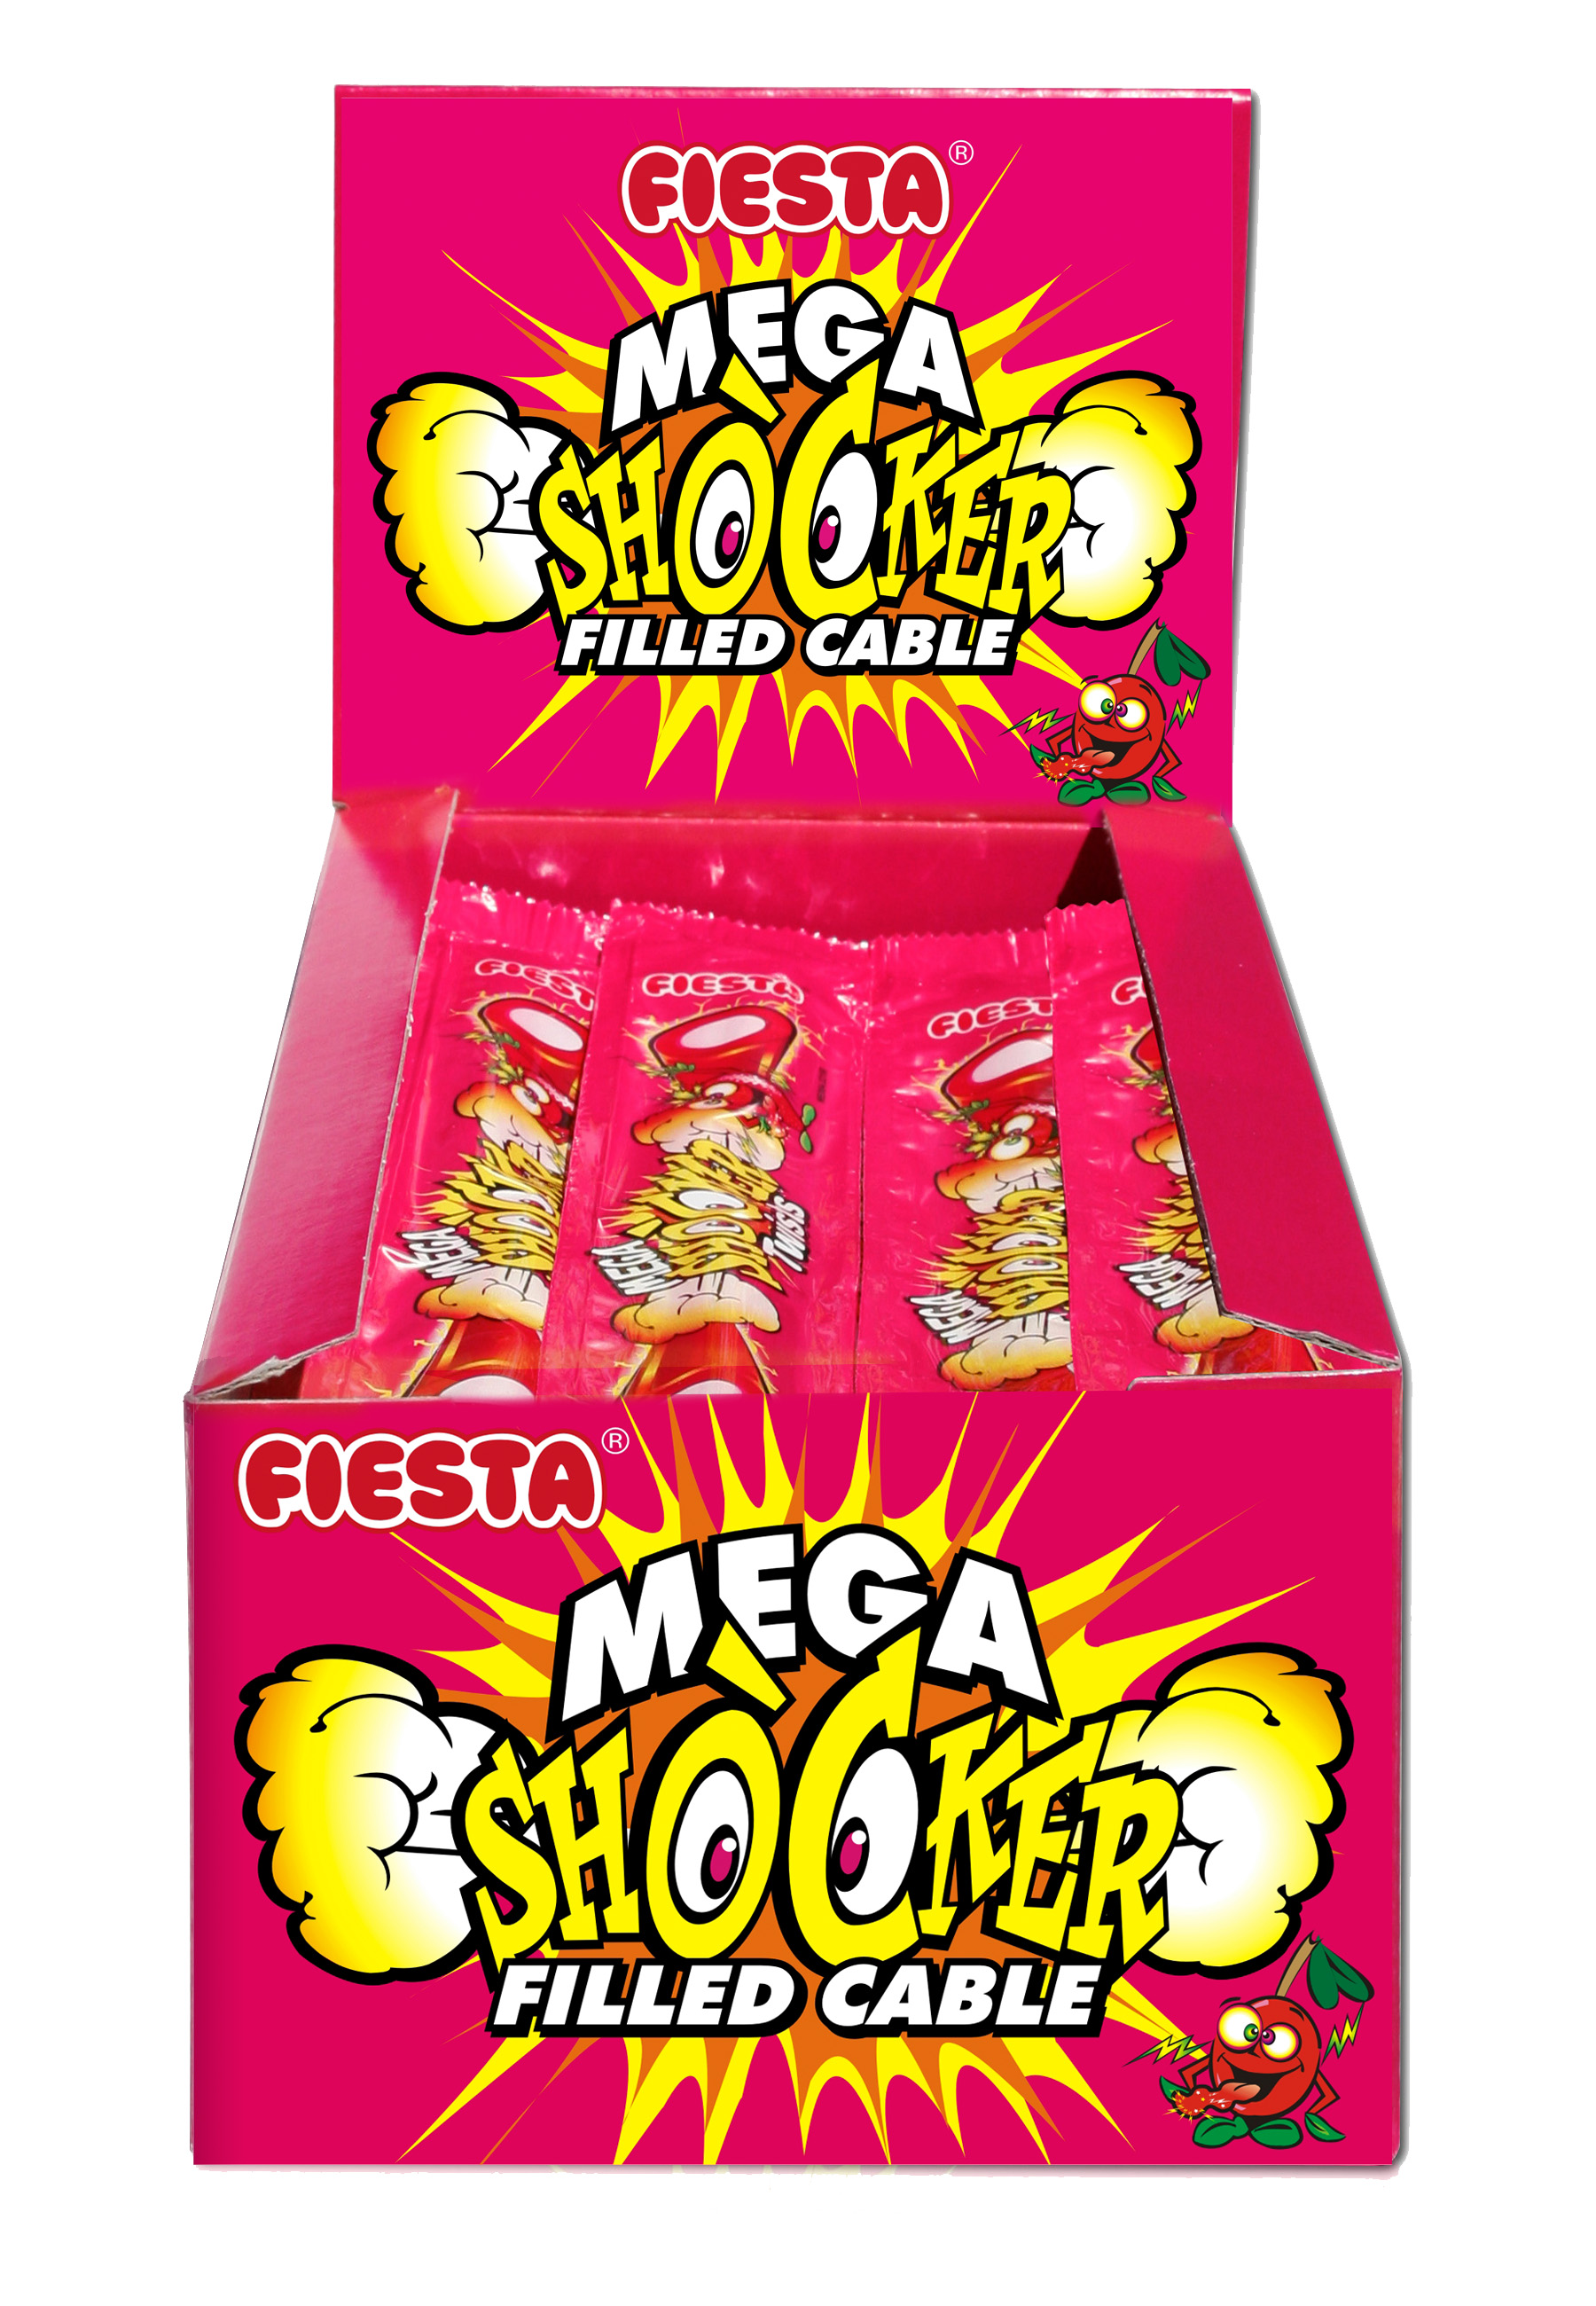 Mega Shocker lollies with bubblegum inside.